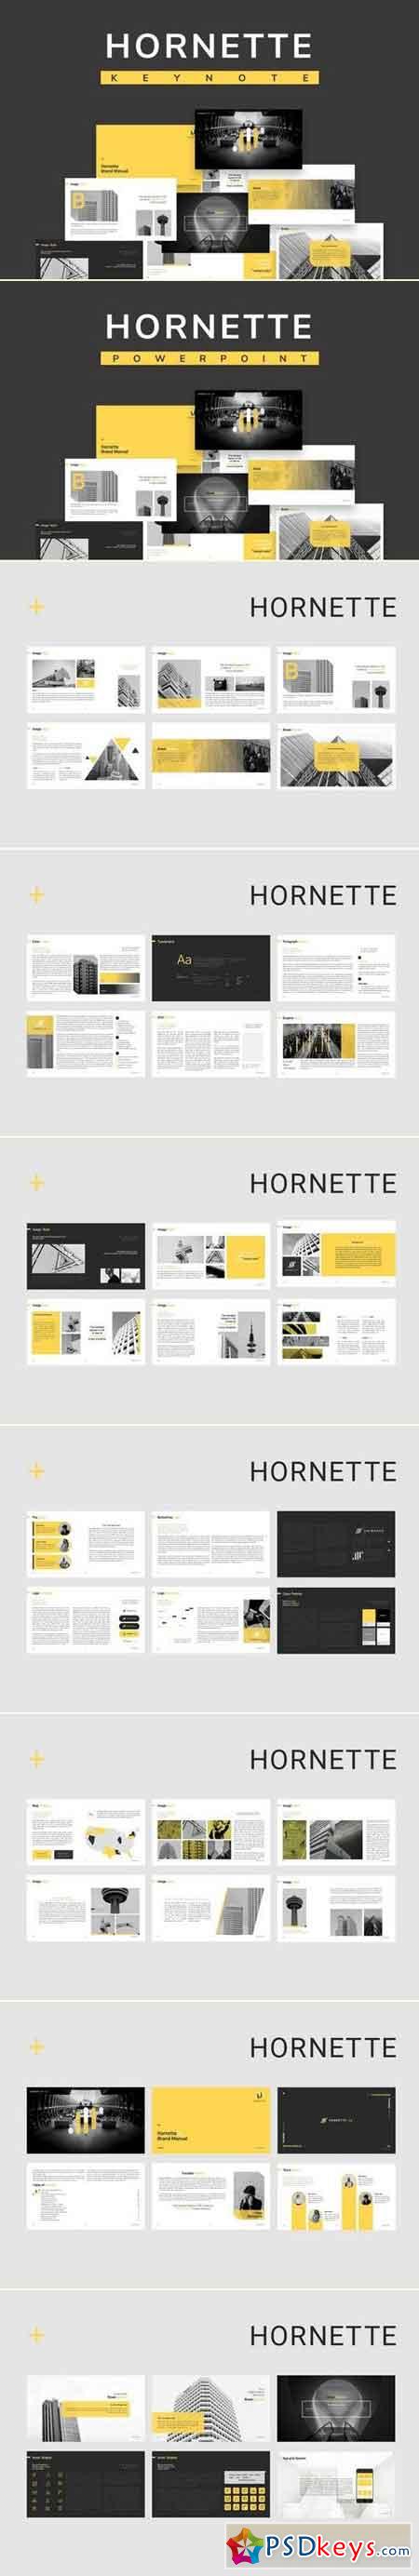 Hornette Powerpoint & Keynote Templates